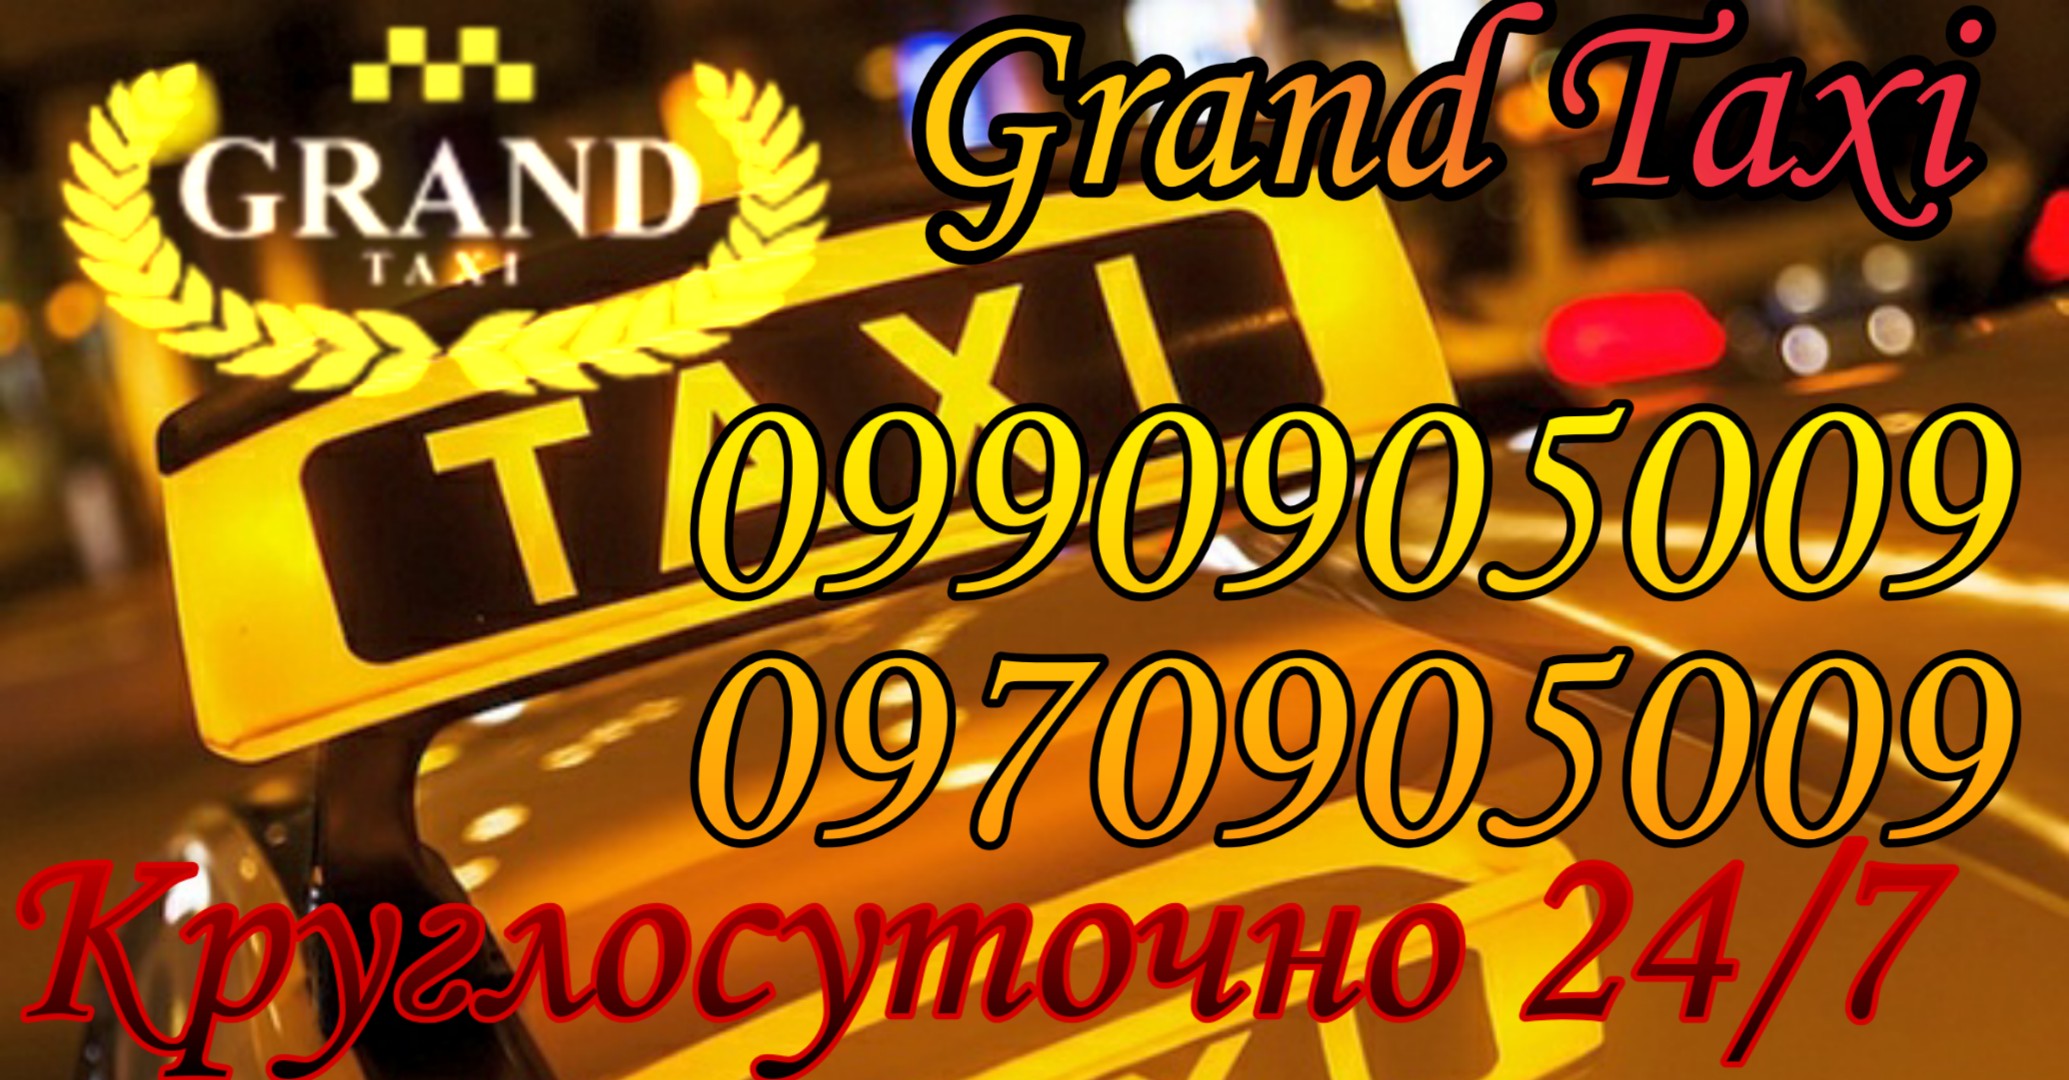 Grand taxi +380970905009